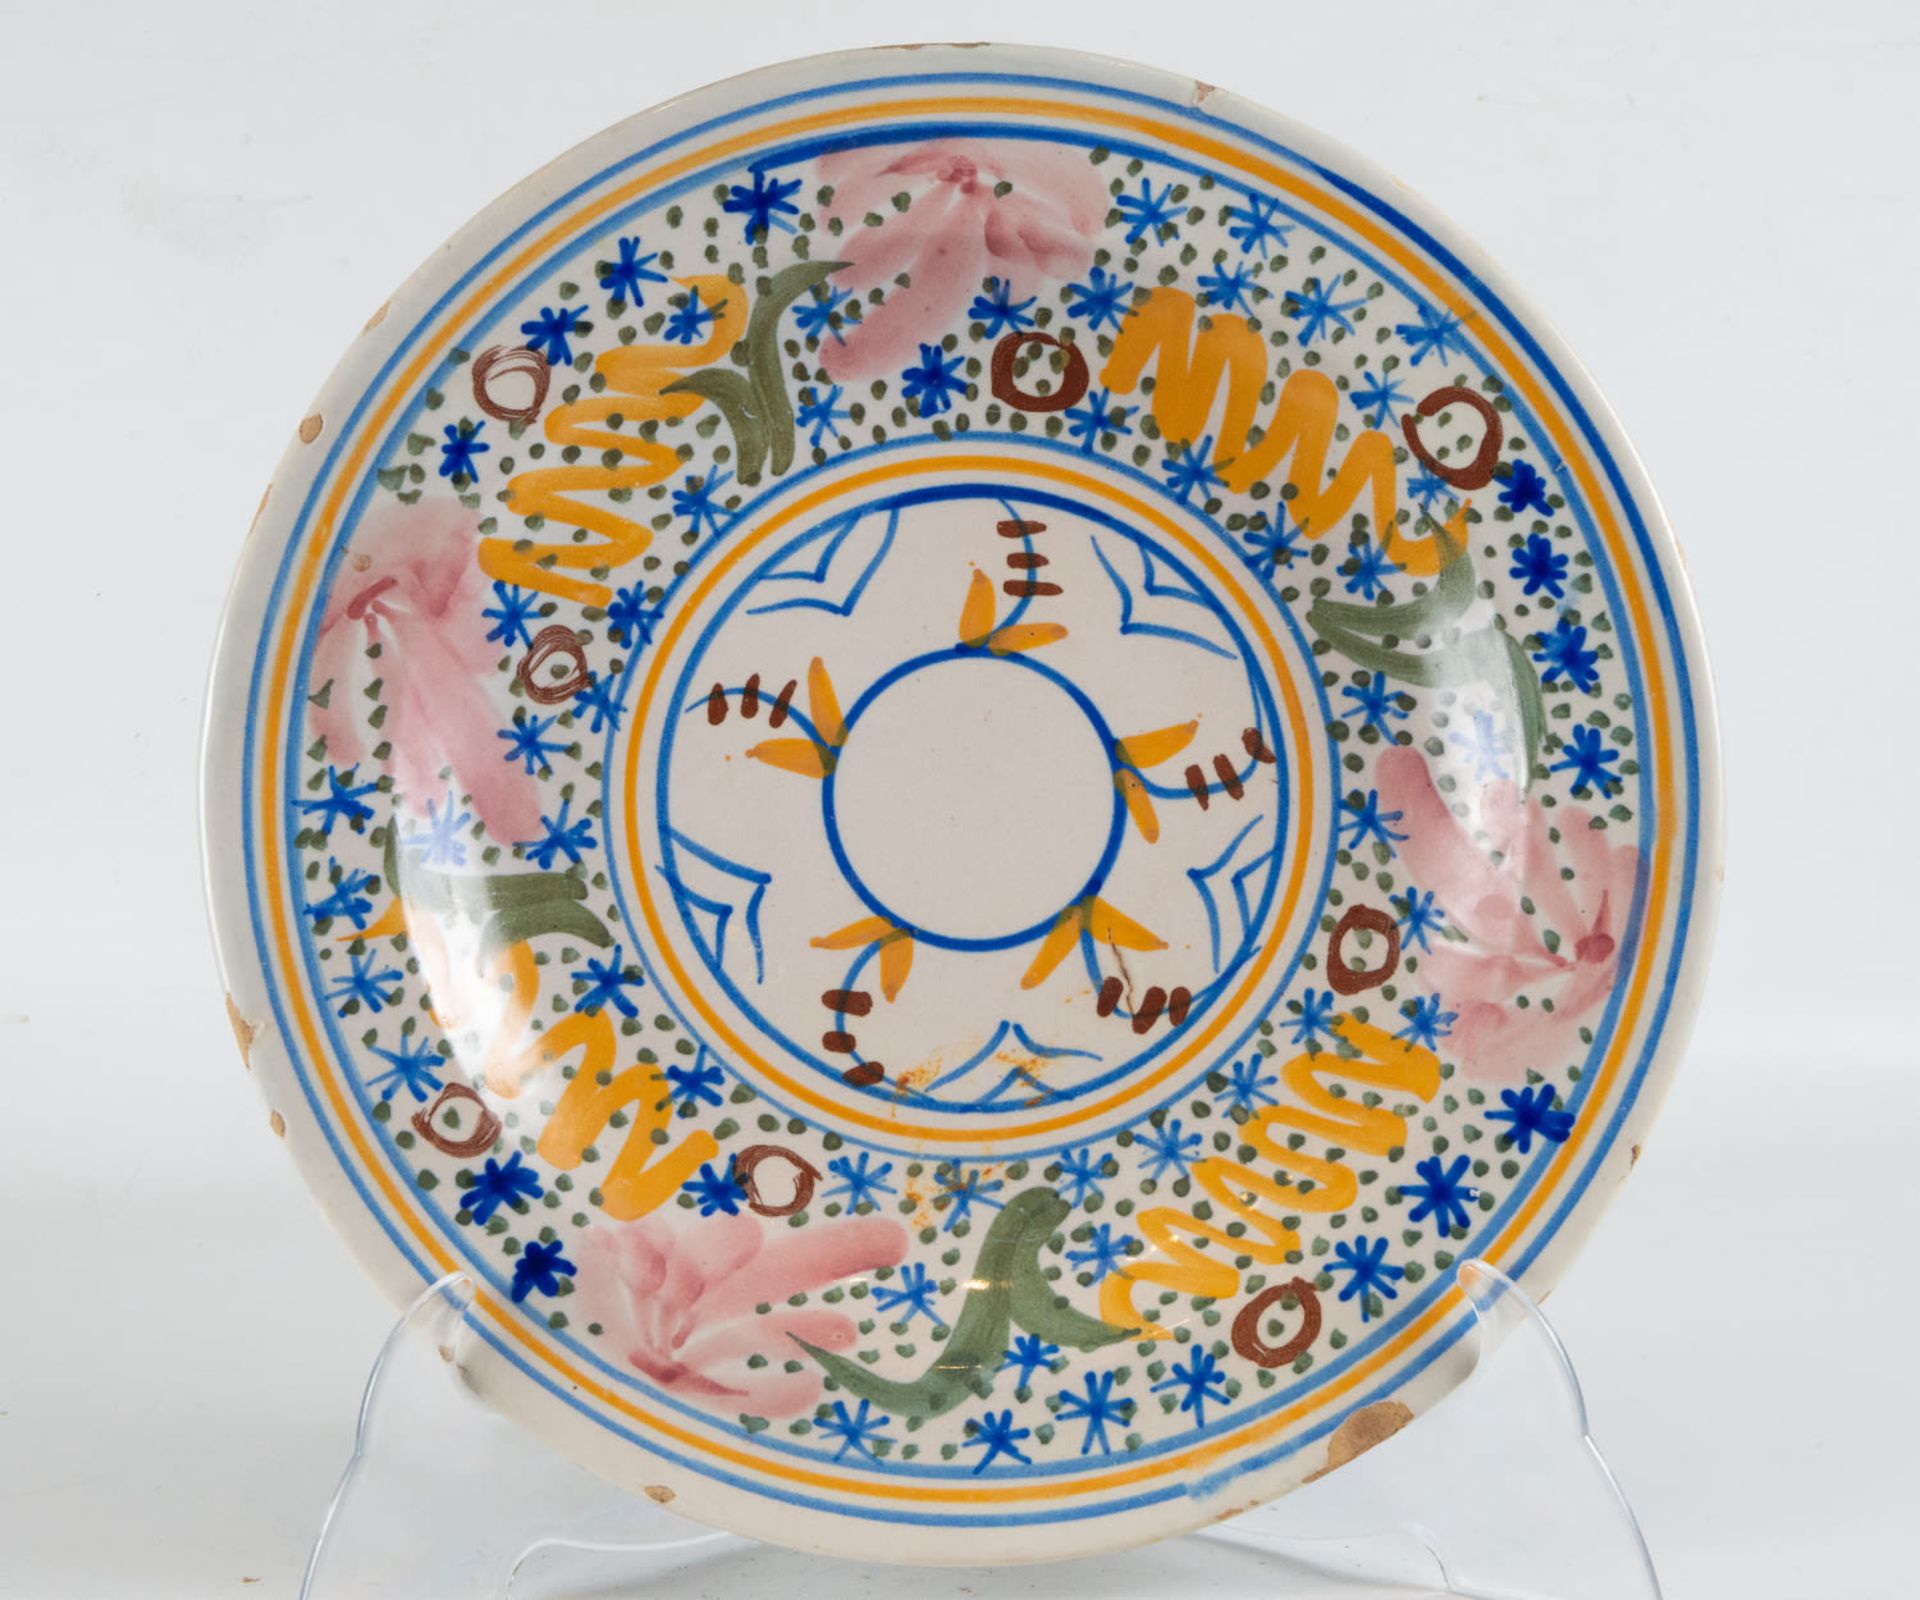 Ceramic plate from Manises, 20th century